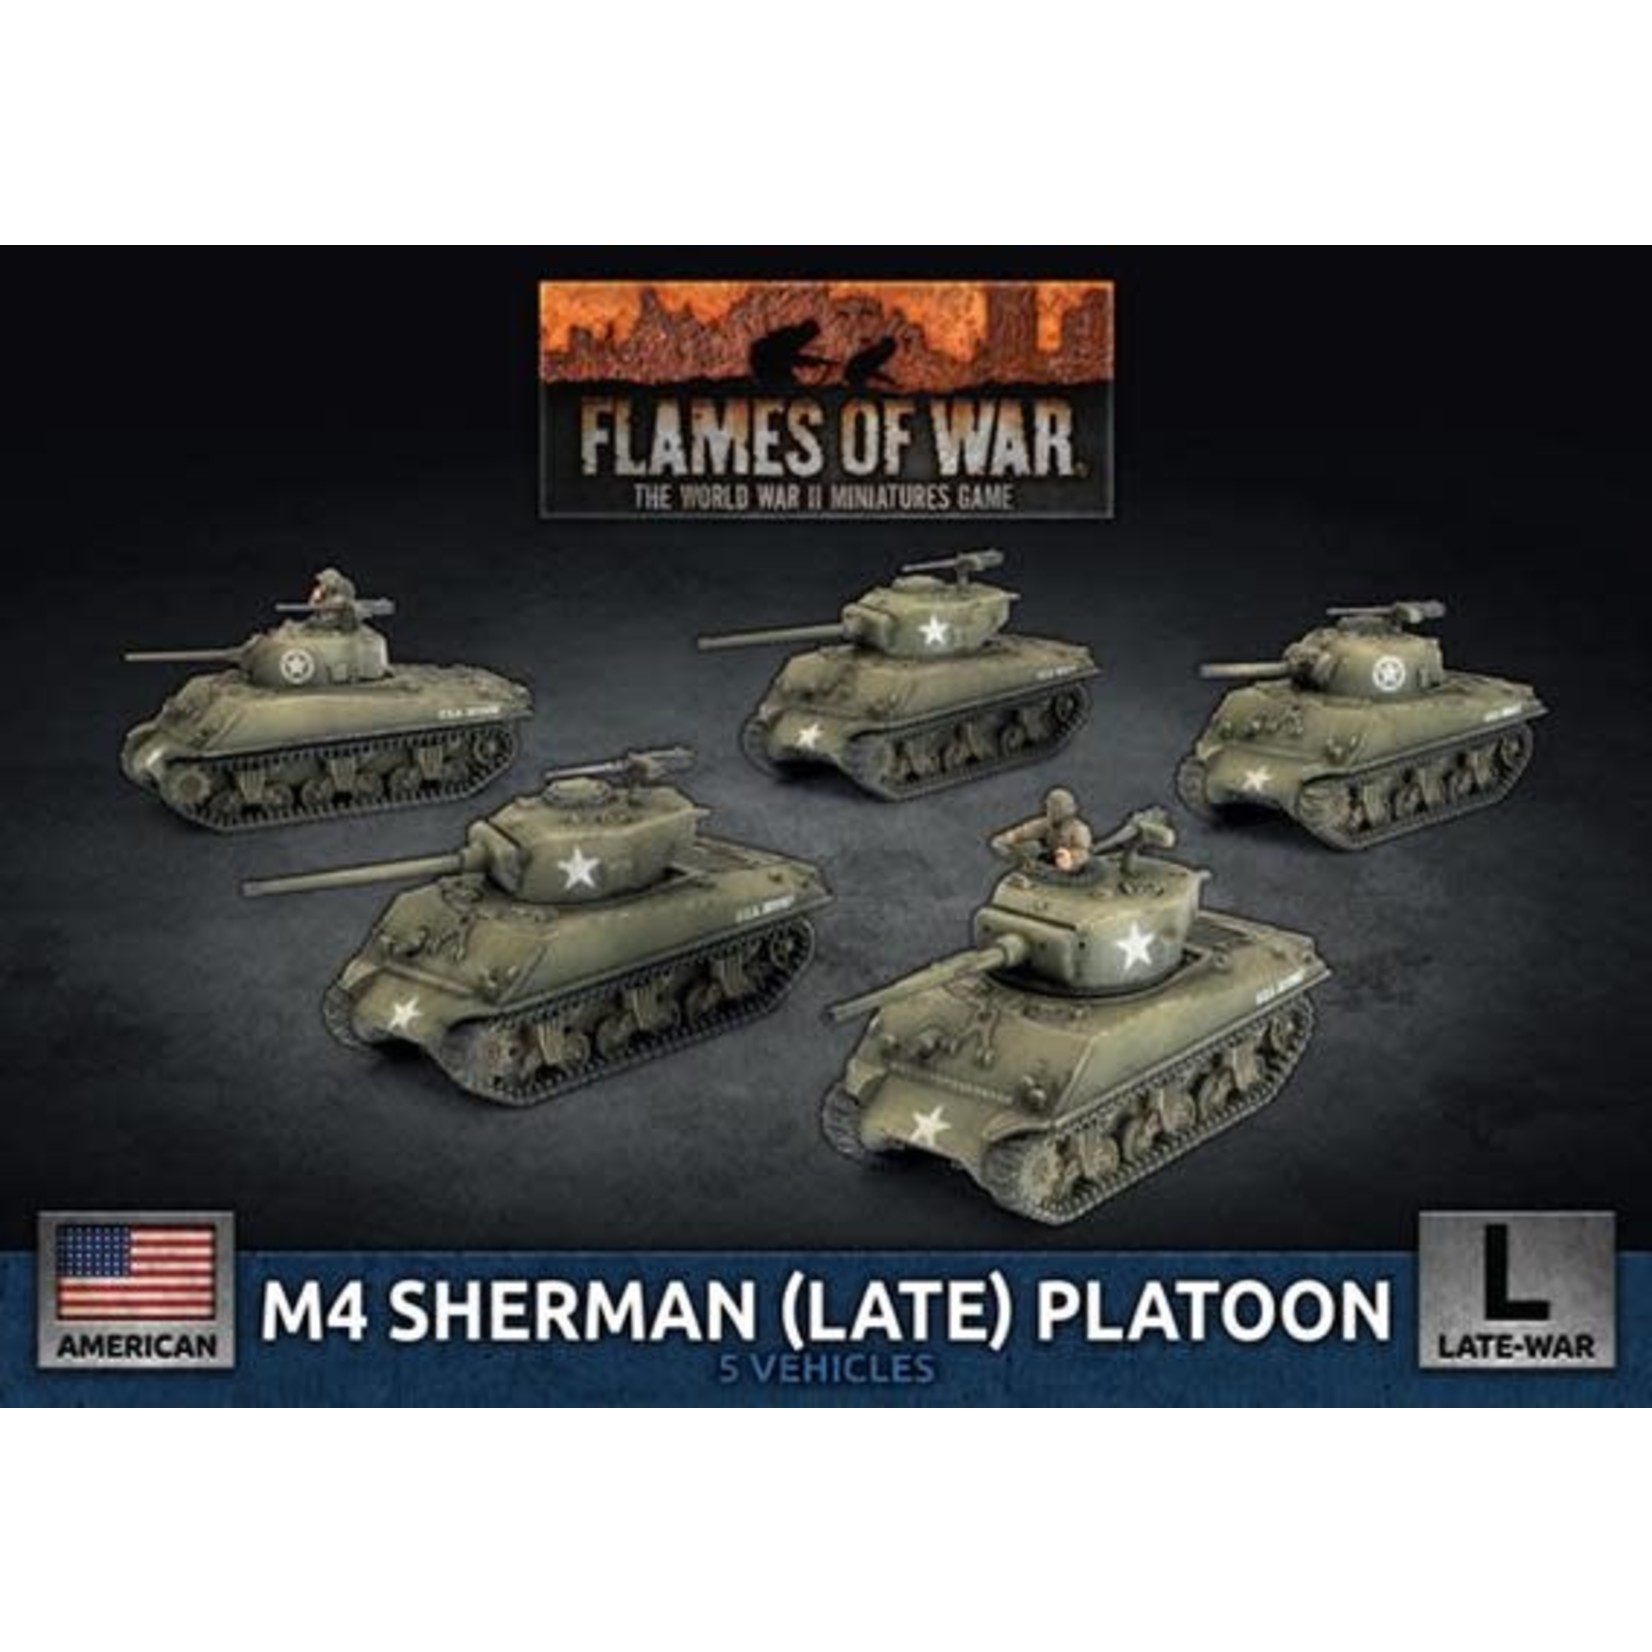 Flames of War Flames of War: American: M4 Sherman (Late) Platoon